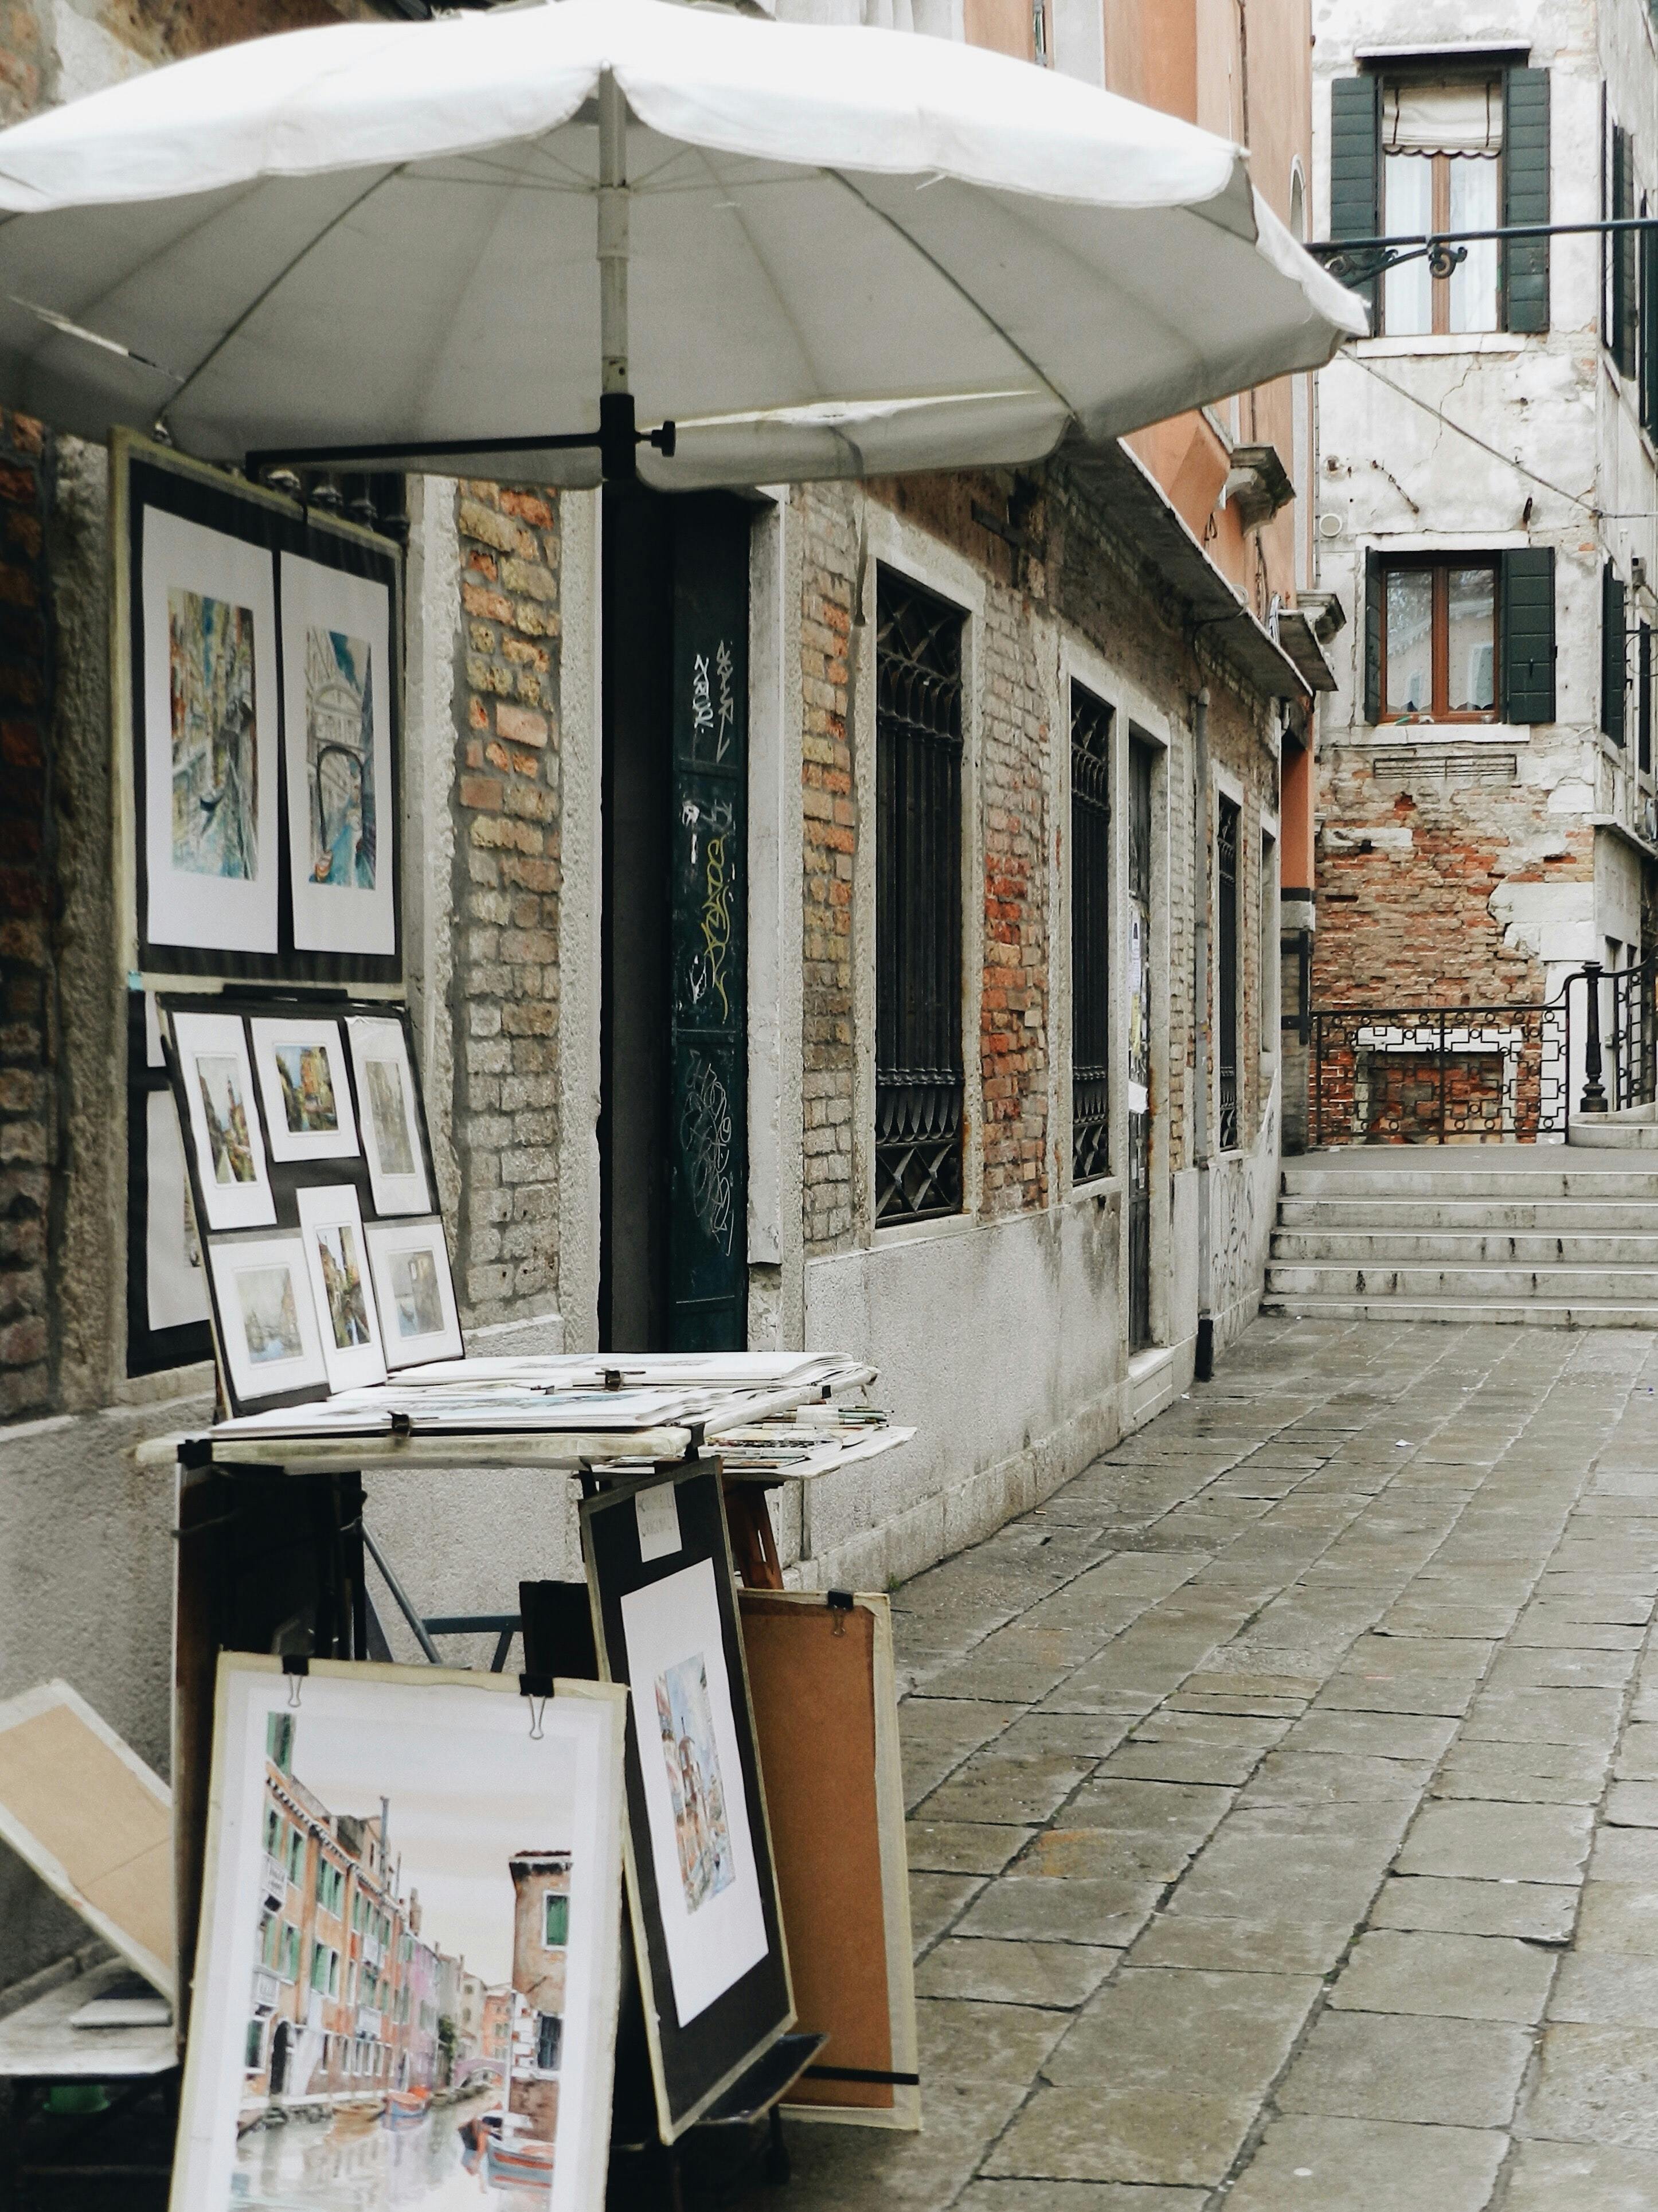 Street art vendor in Venice